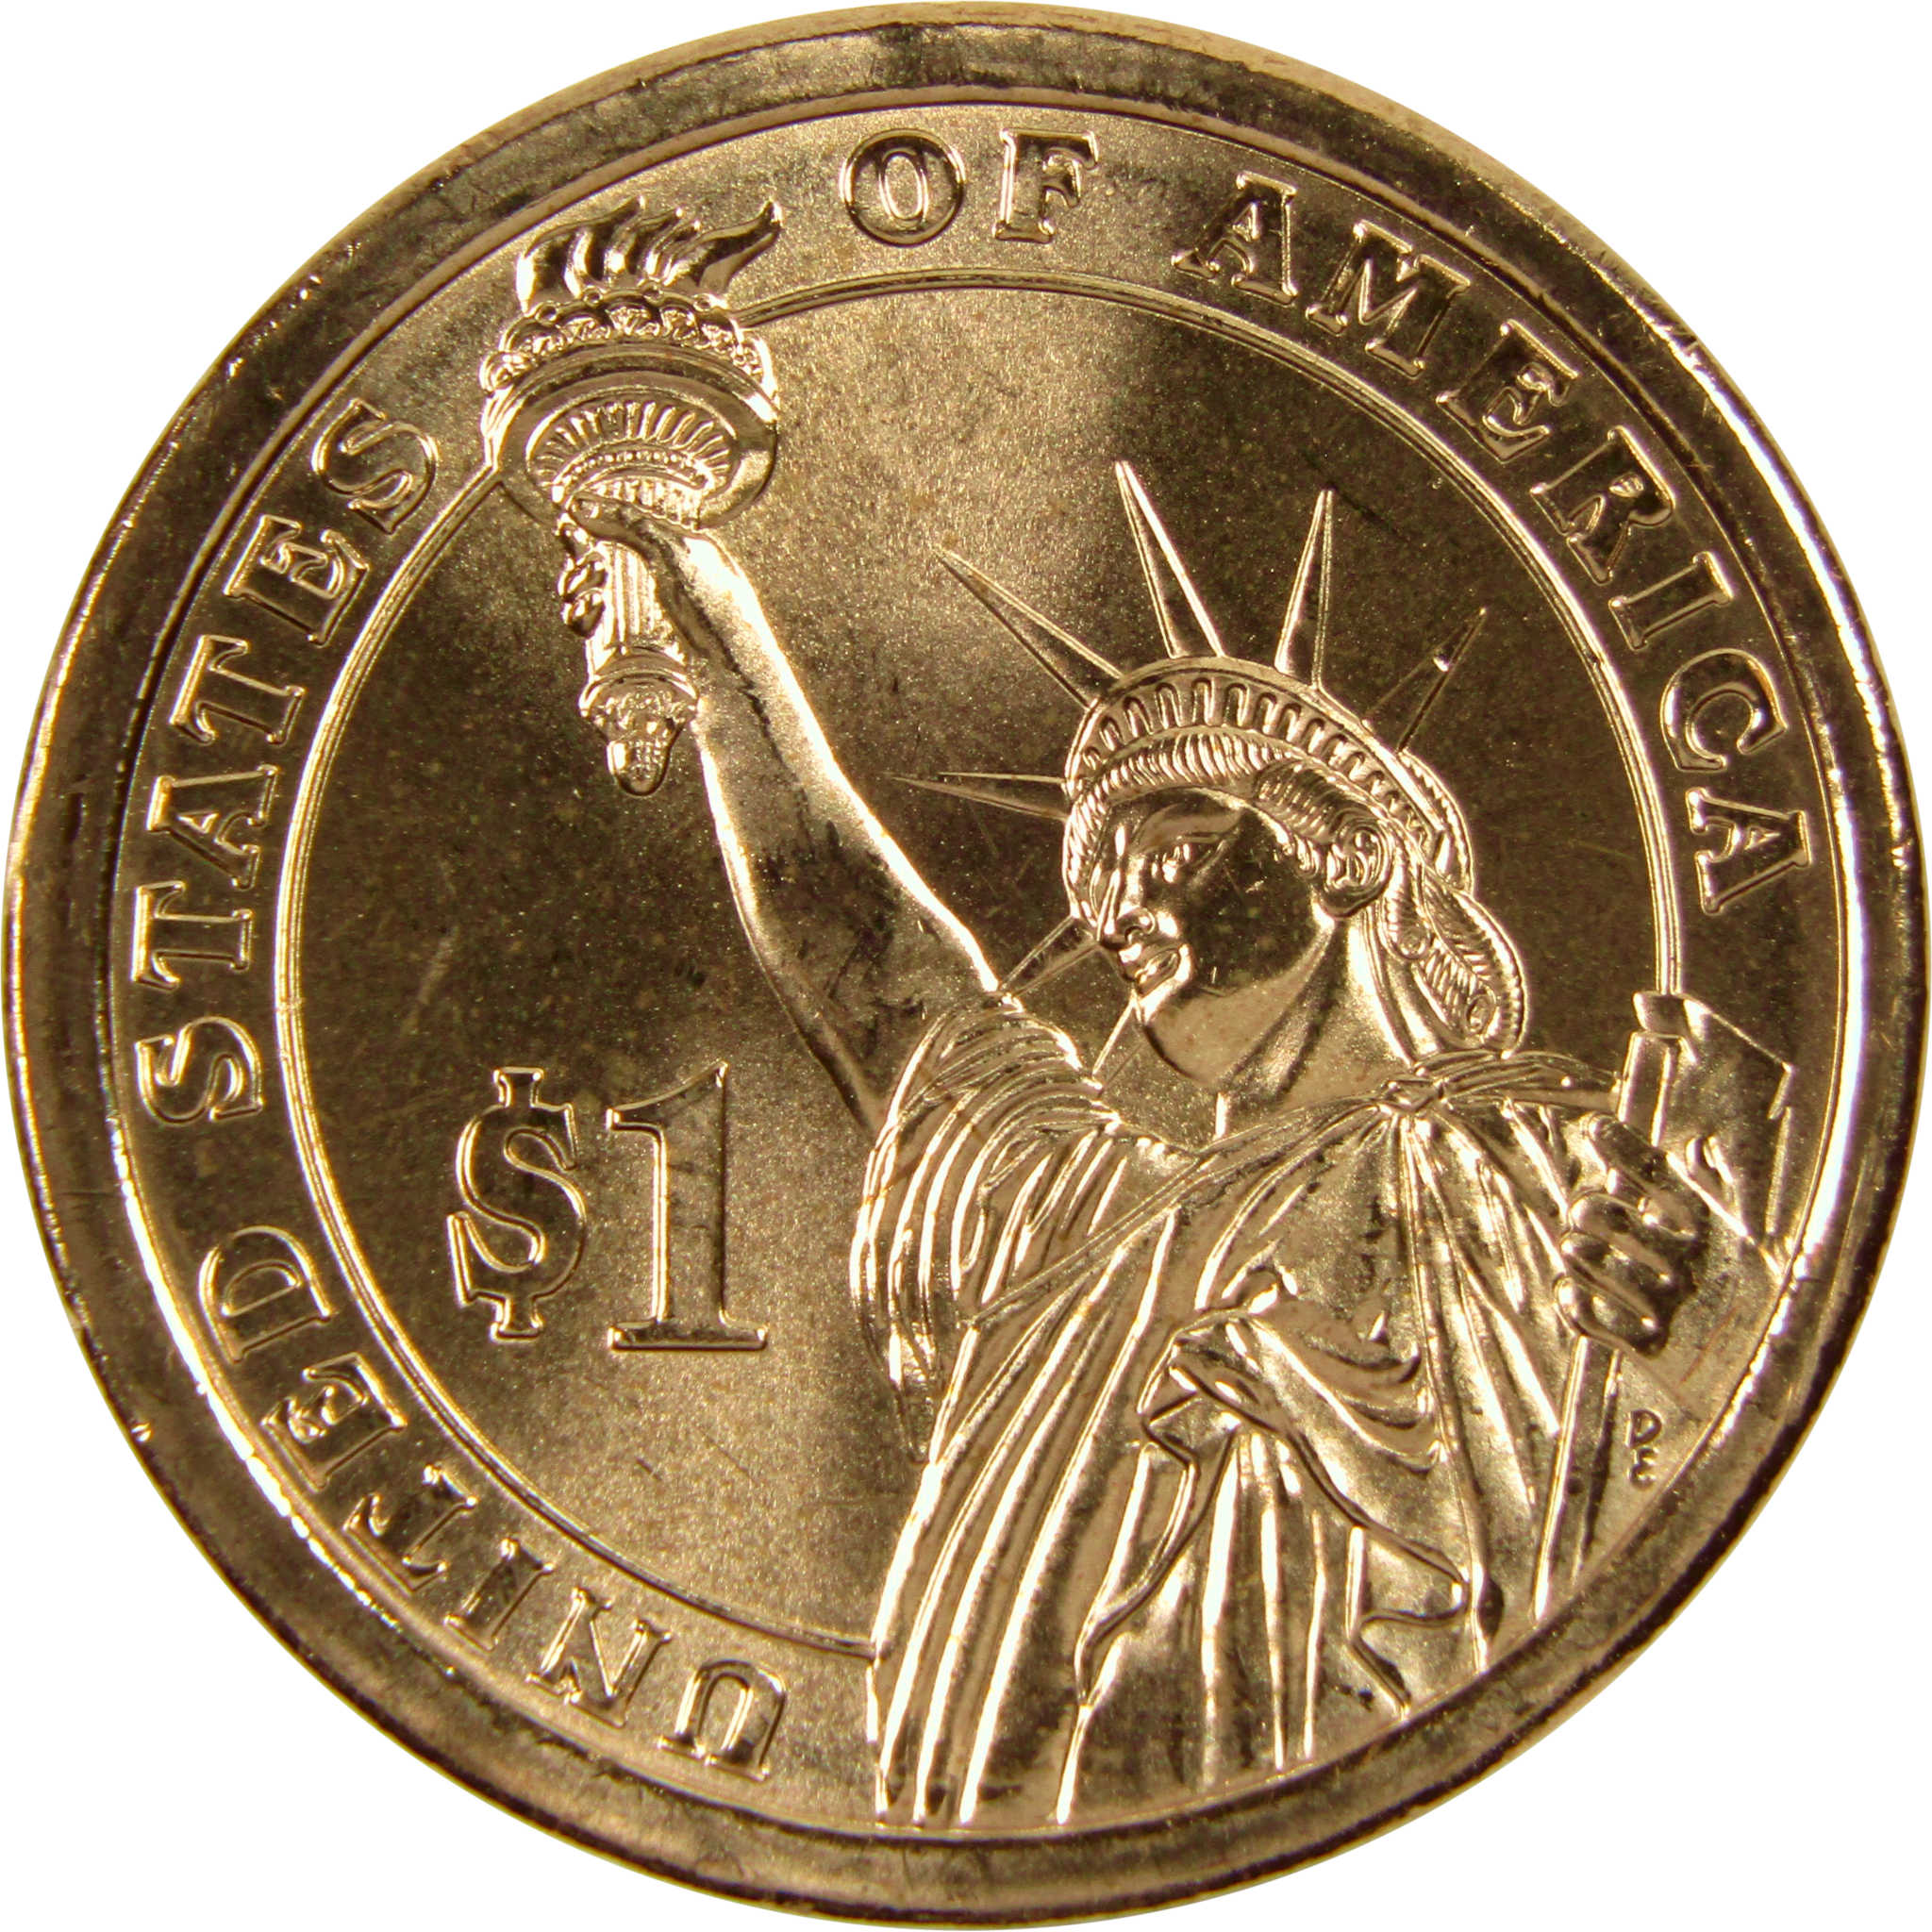 2013 D Woodrow Wilson Presidential Dollar BU Uncirculated $1 Coin